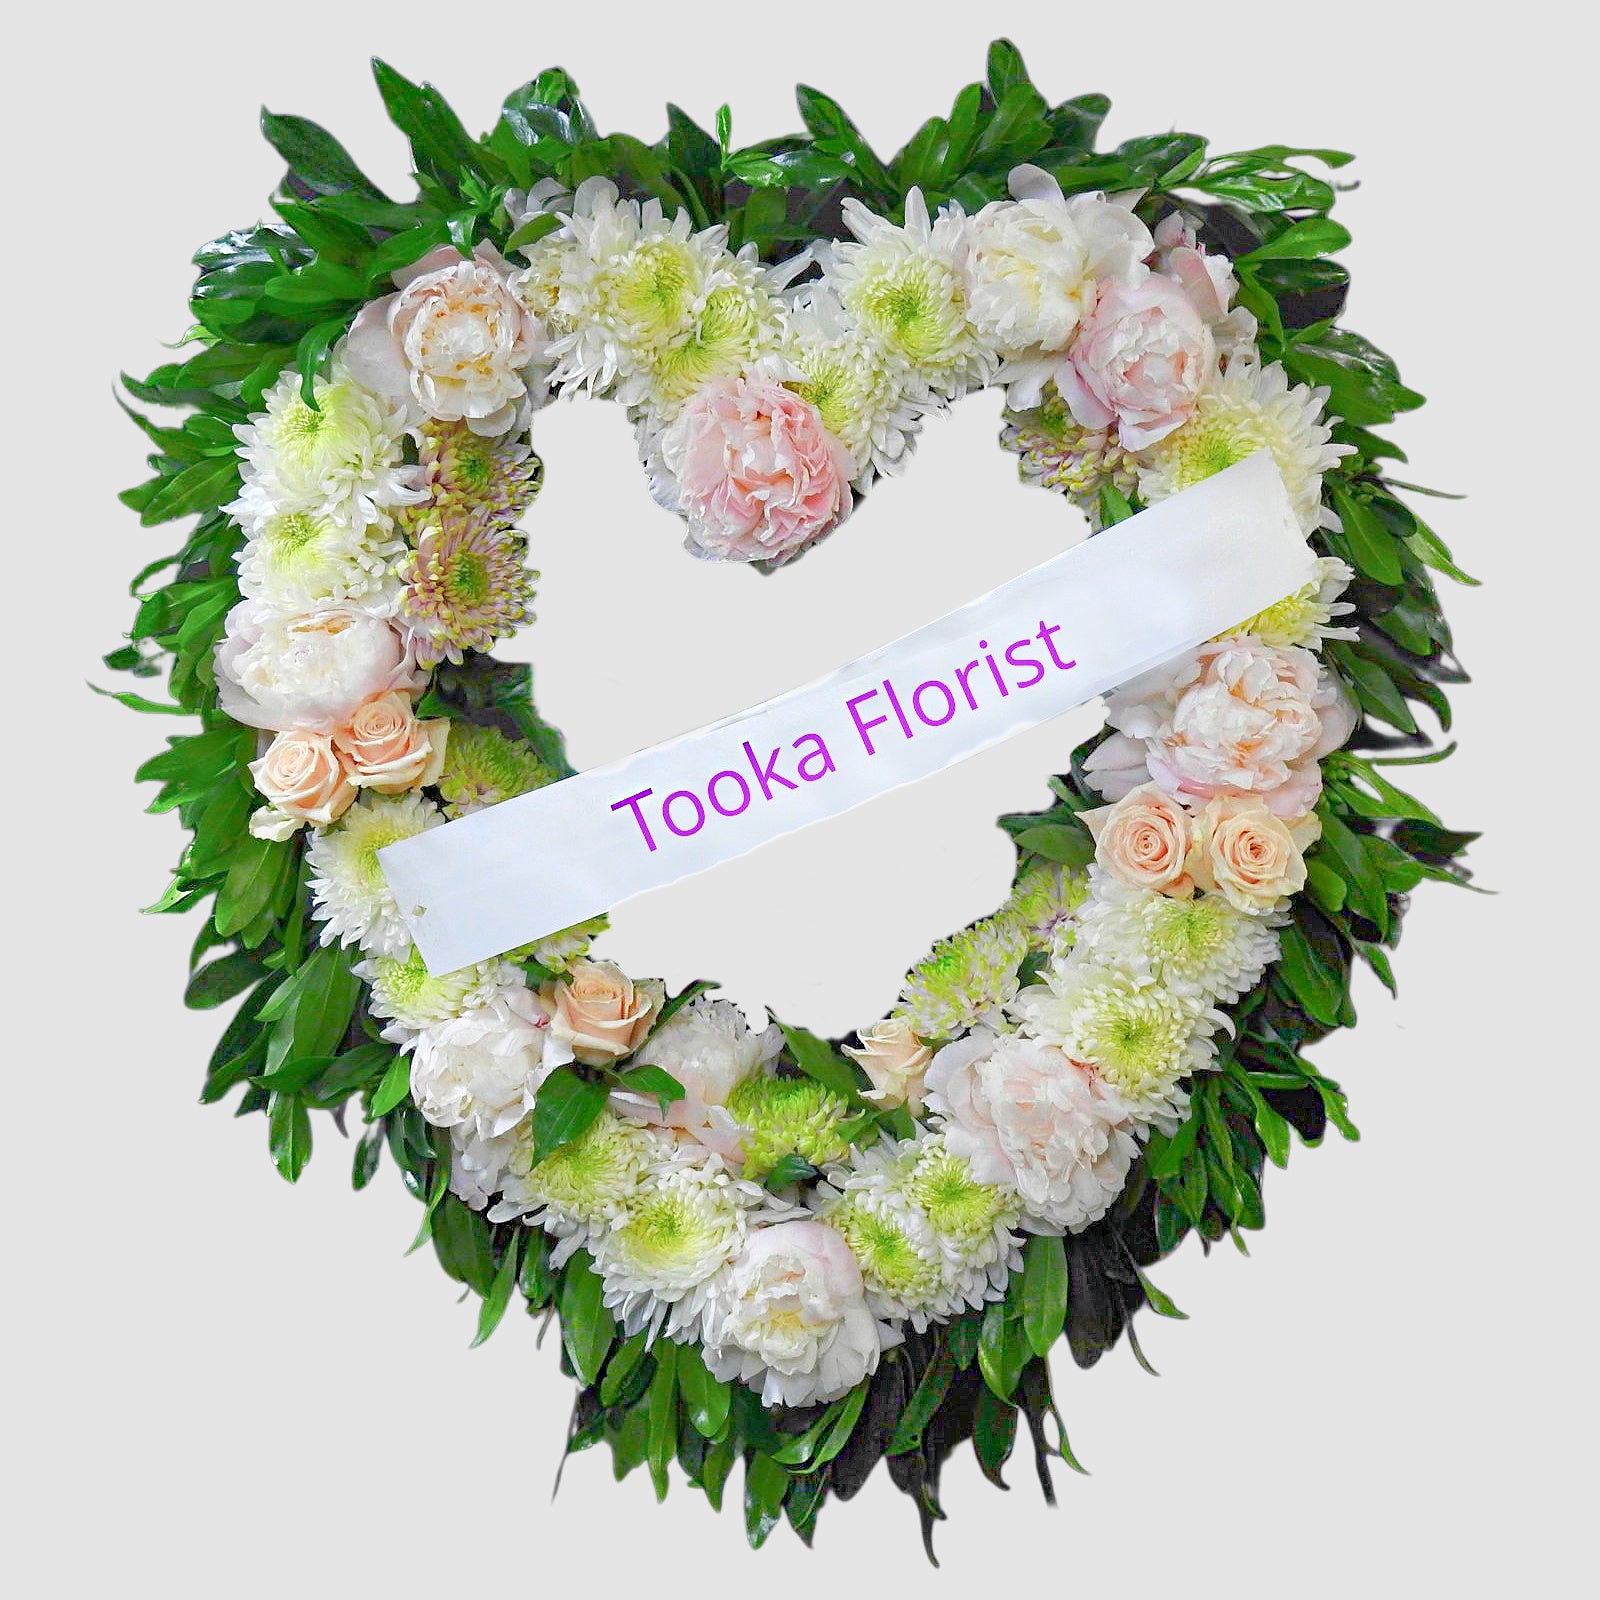 Heart Spray - Tooka Florist